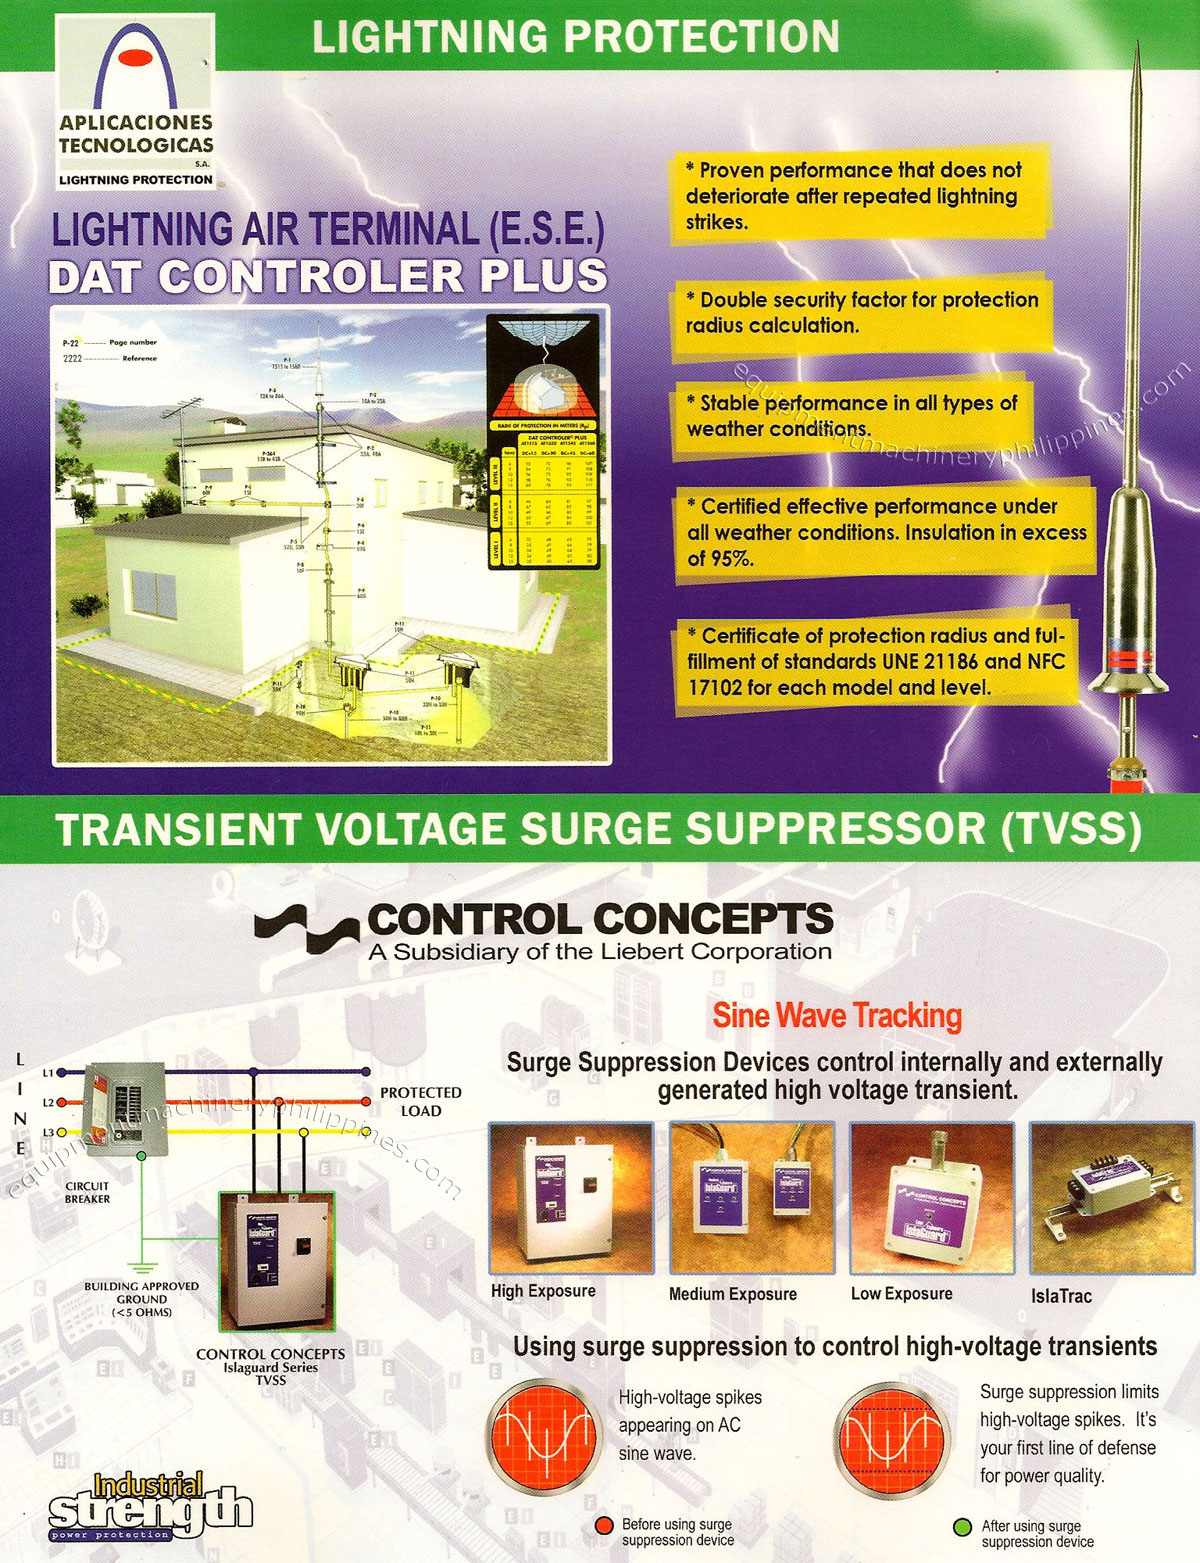 Lightning Protection by Aplicaciones Tecnologicas; Transient Voltage Surge Suppressor TVSS by Control Concepts